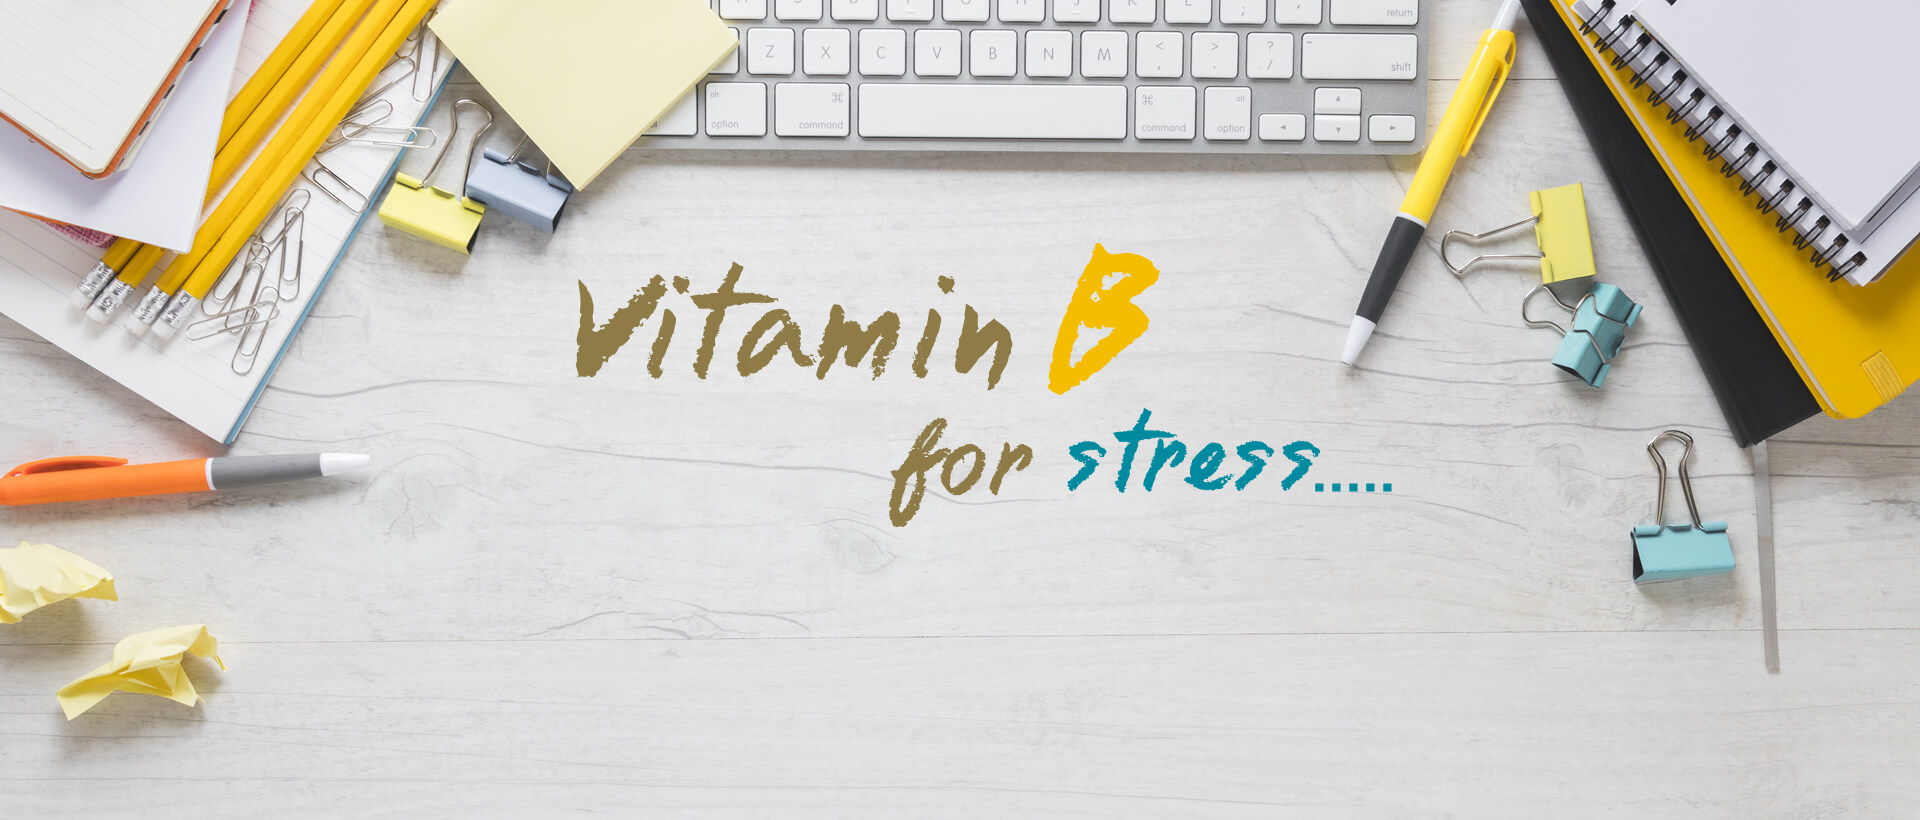 Vitamin B for stress